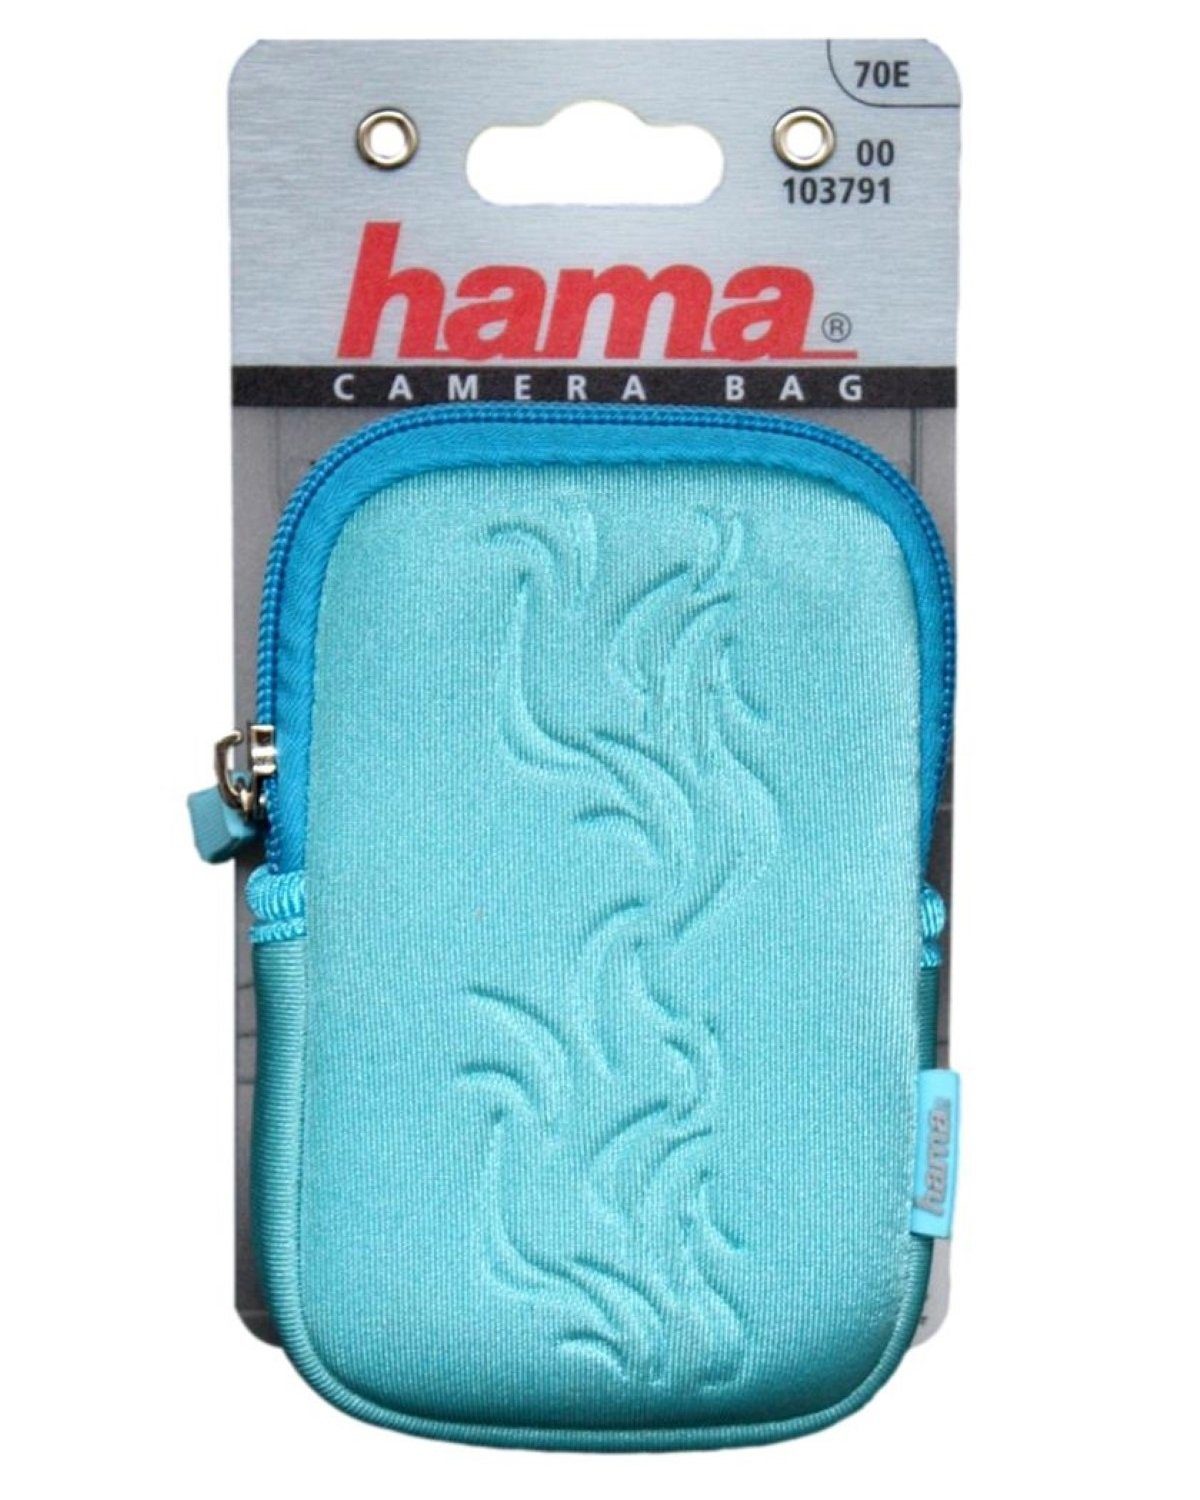 Kamera-Tasche 70E Reißverschlussöffnung, Gürtelschlaufe, Hama Fancy Neopren-Material Kameratasche Türkis, Neopren Flexibles